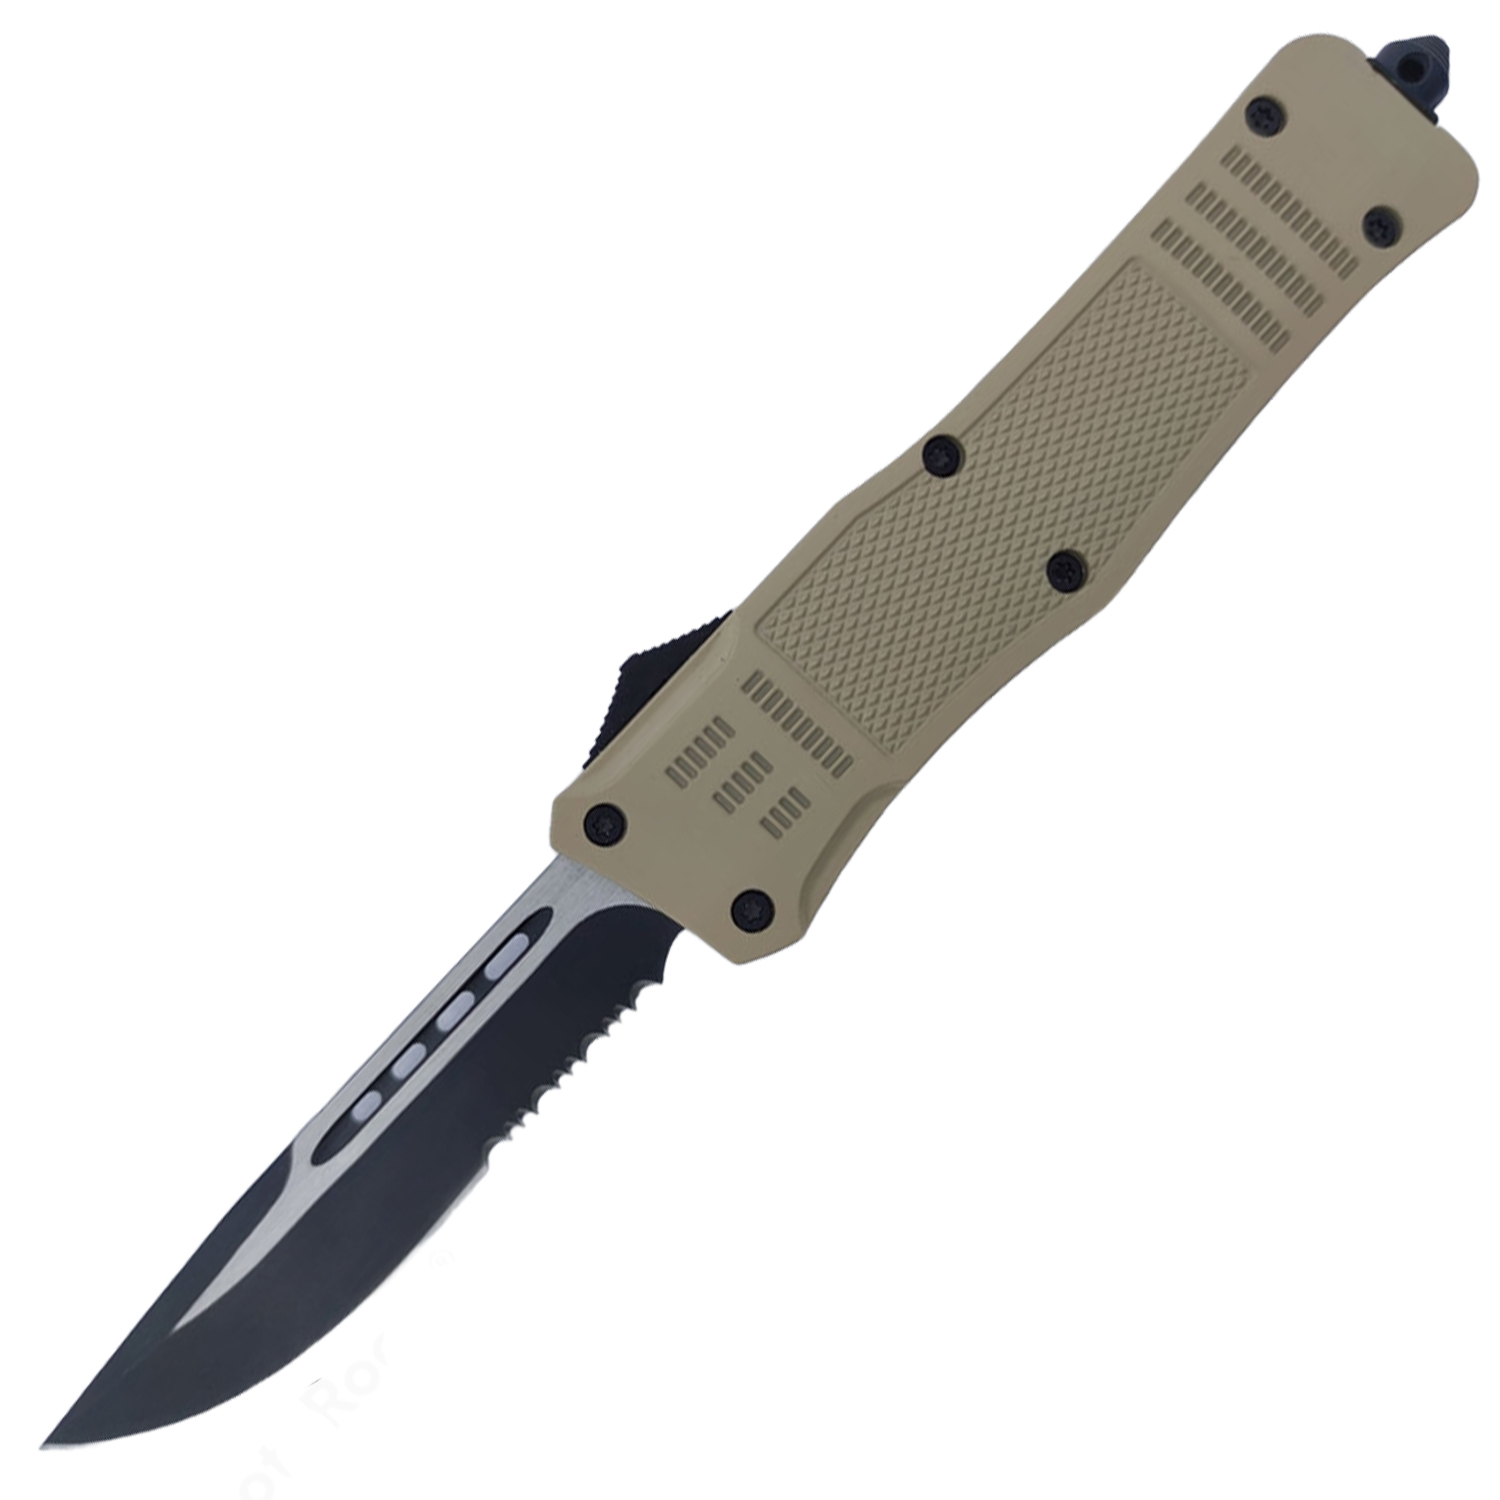 Covert OPS USA OTF Automatic Knife 9 inch Beige D2 Steel Blade DP Serr